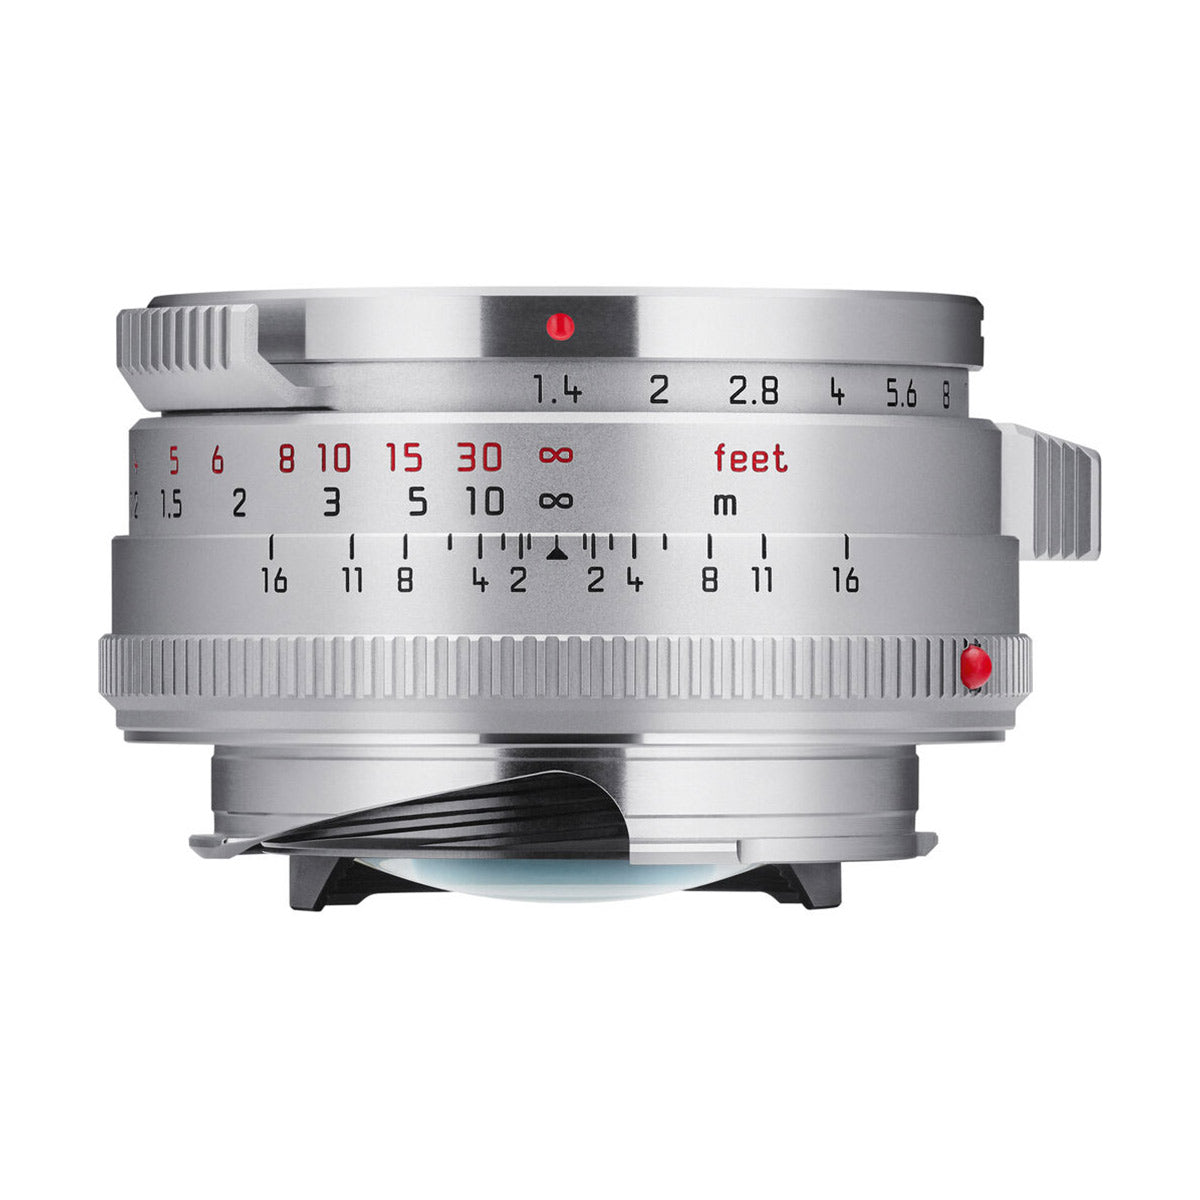 Leica 35mm f/1.4 Summilux-M Lens (Silver "Steel Rim")